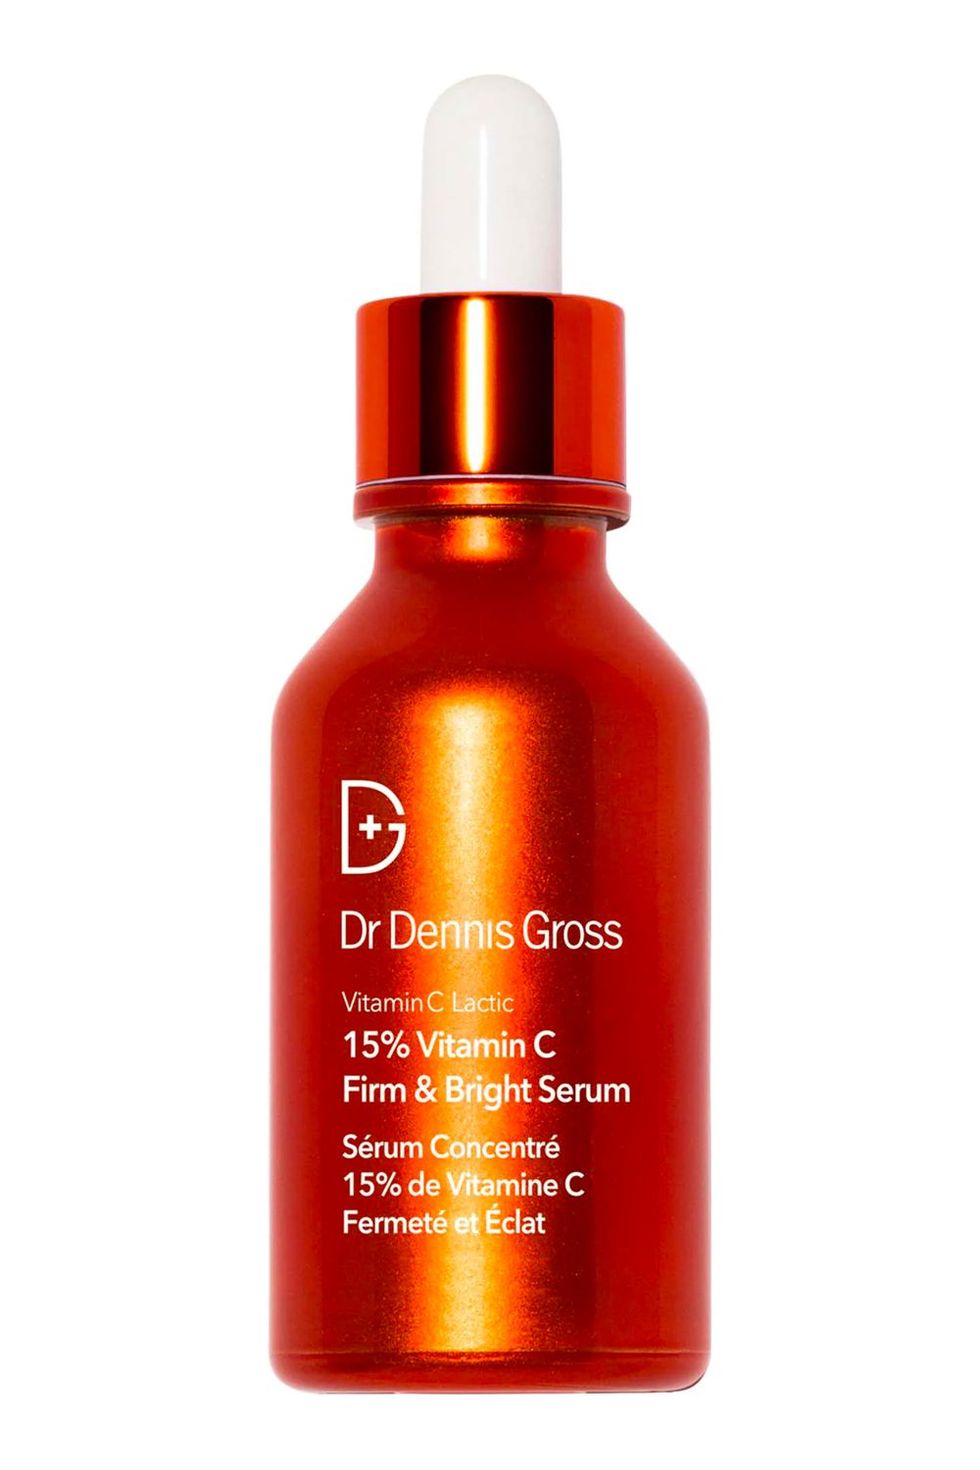 Dr. Dennis Gross Skincare 15% Vitamin C Firm & Bright Serum